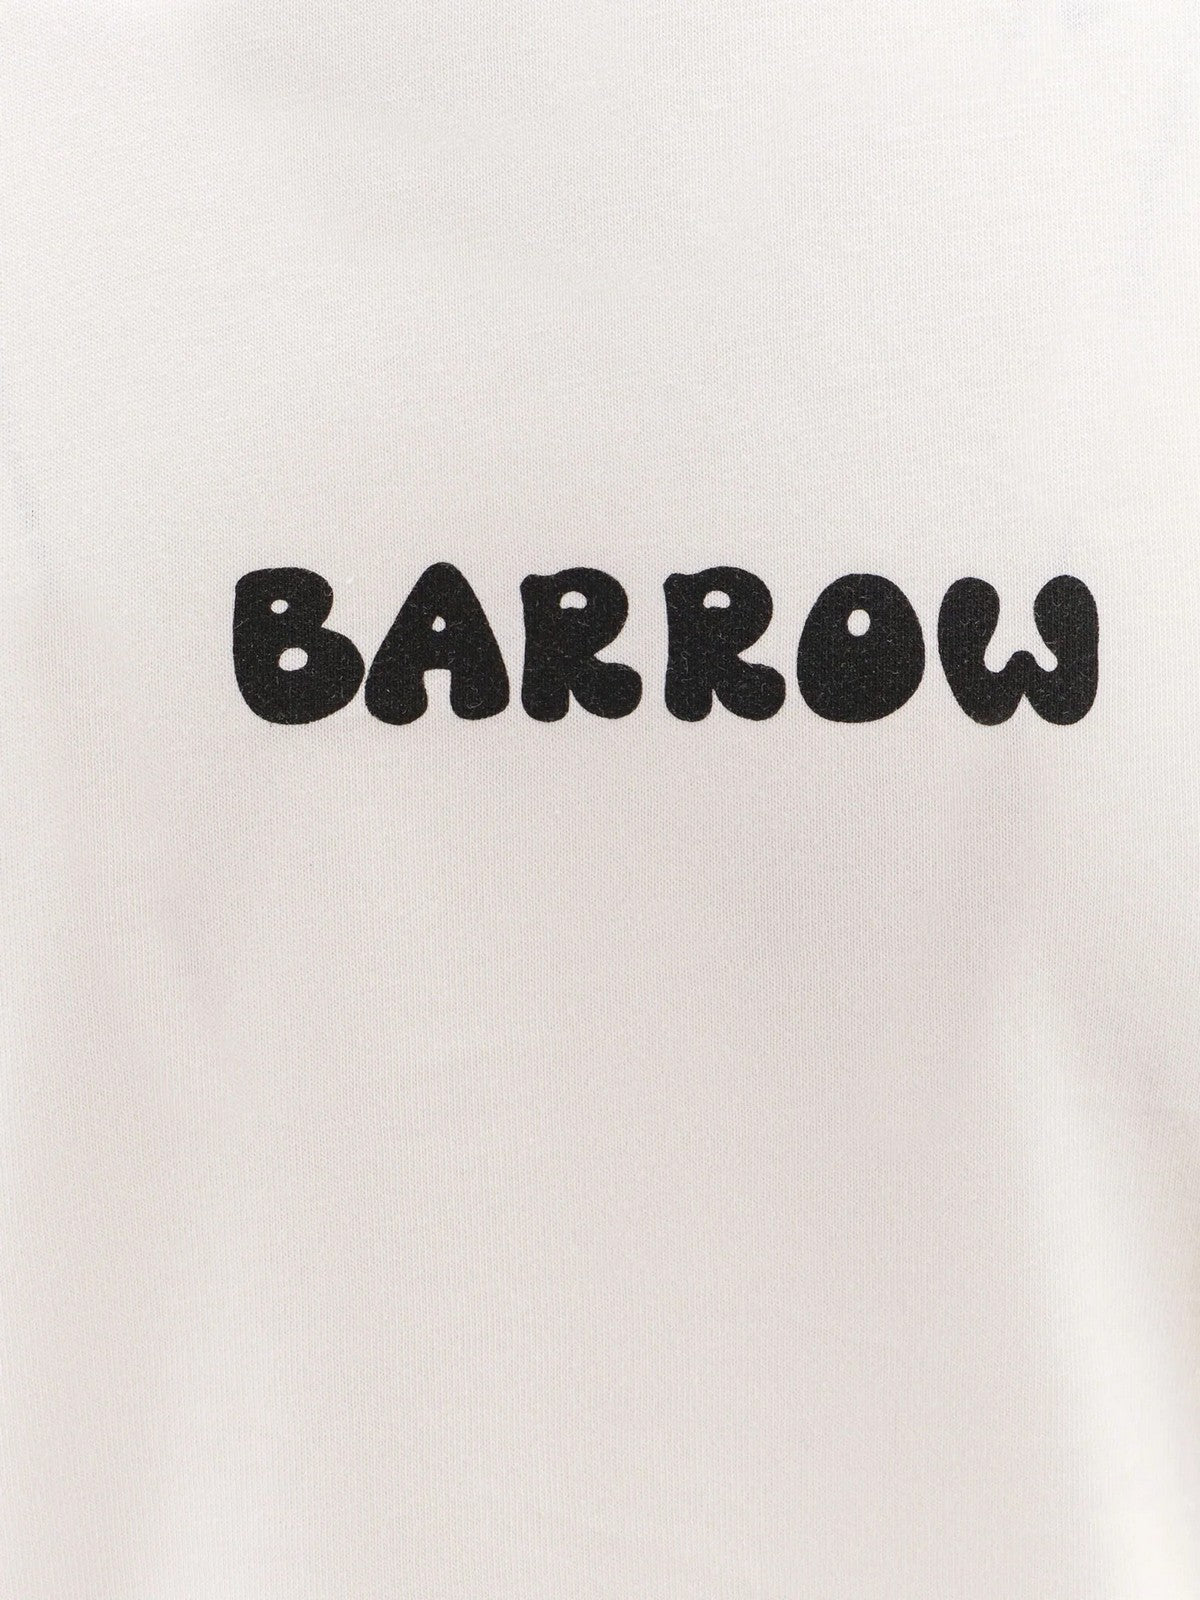 BARROW T-Shirt et Polo Hommes S4BWUATH147 002 Blanc